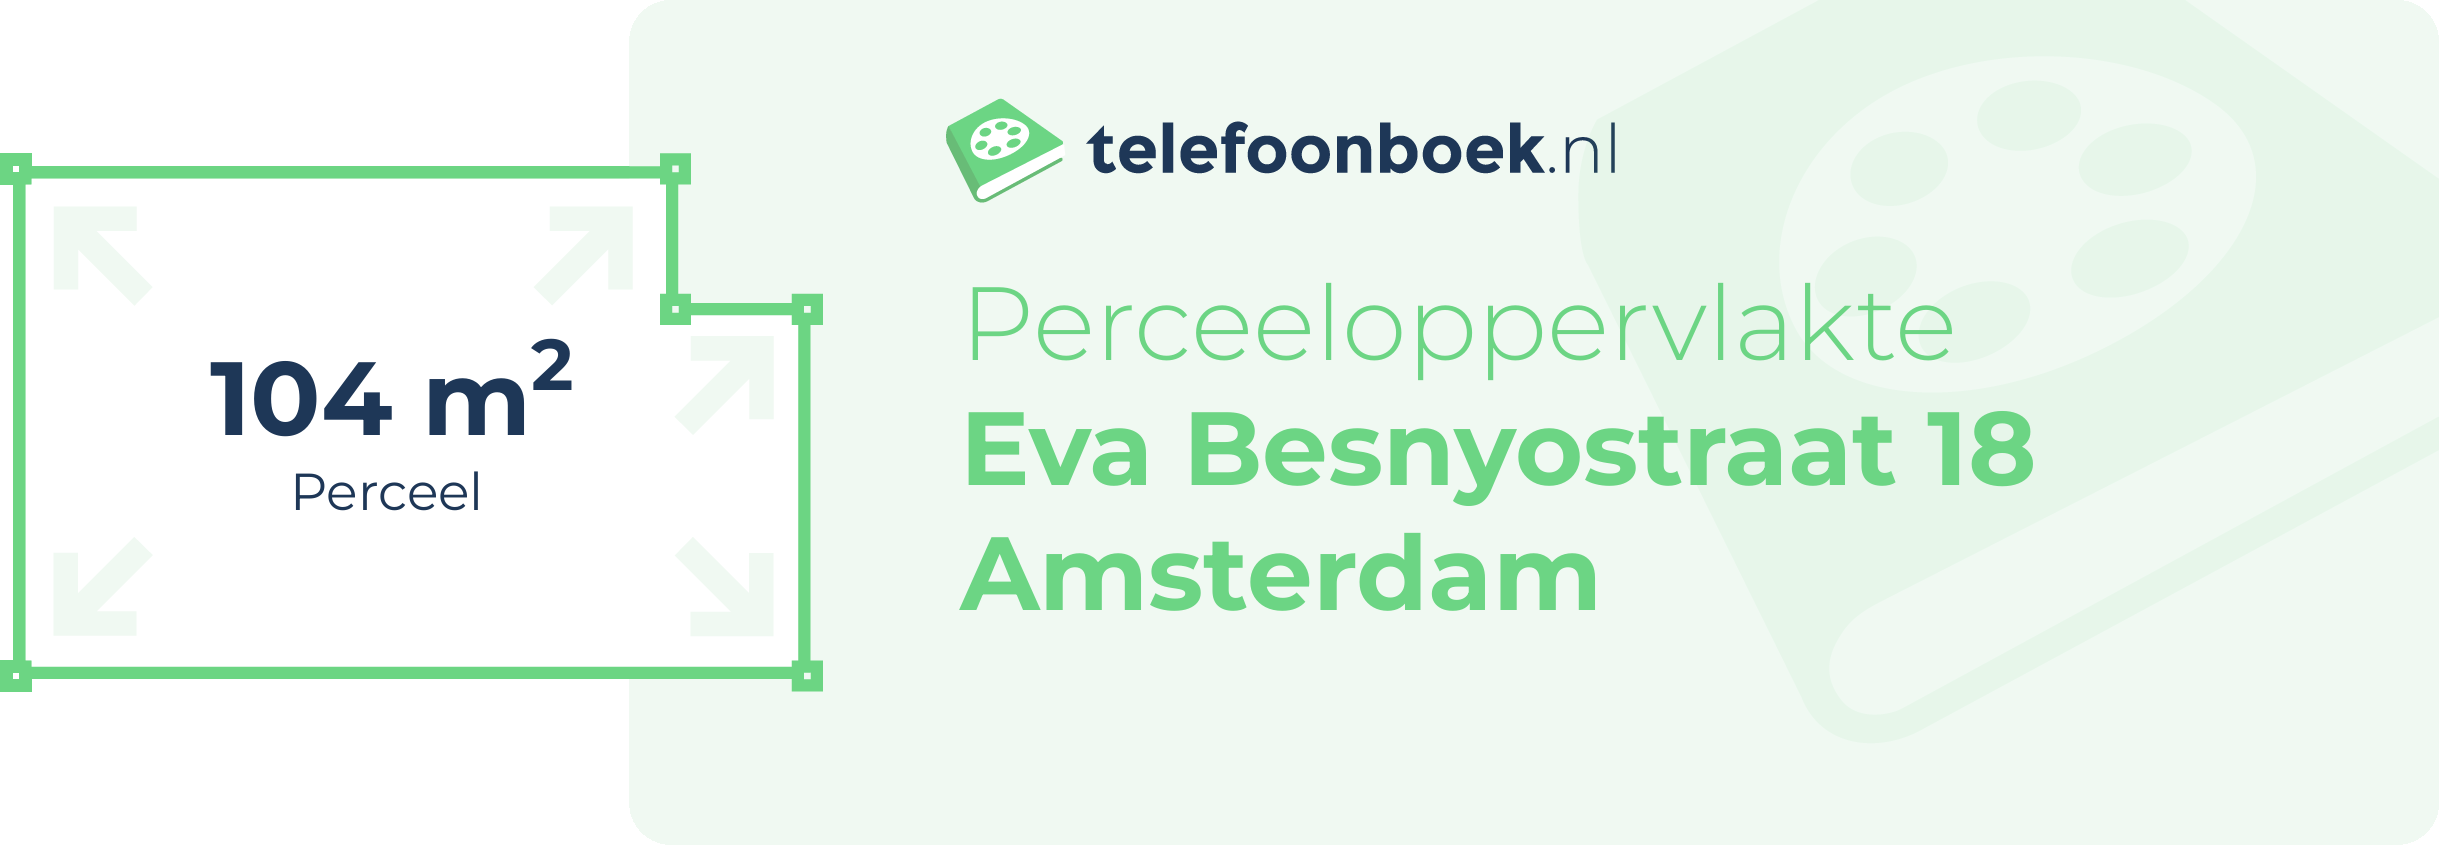 Perceeloppervlakte Eva Besnyostraat 18 Amsterdam